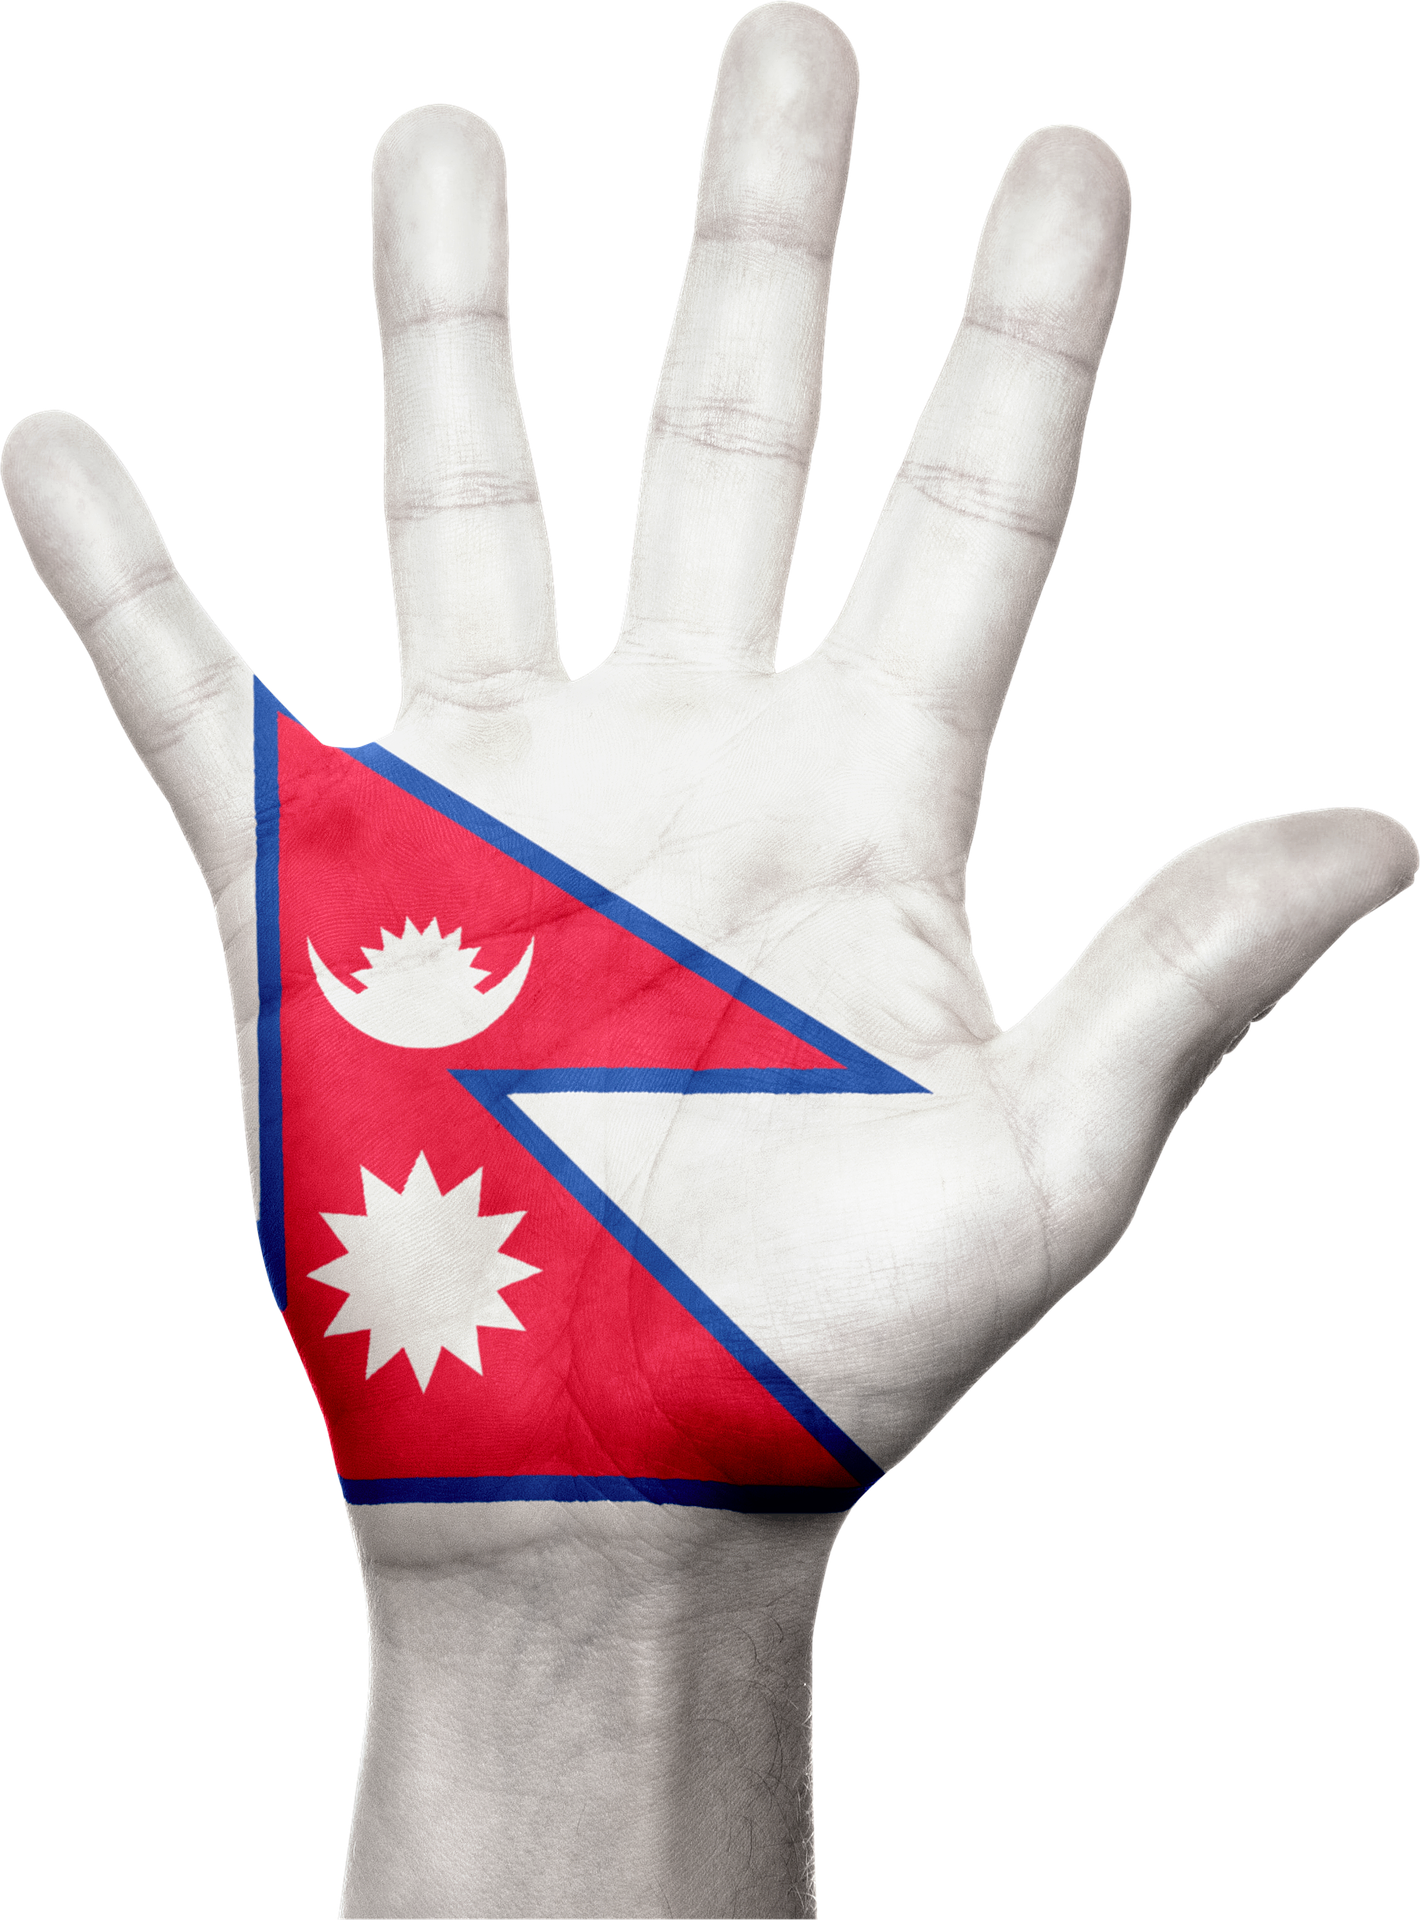 Nepal fails to pass constitution amendment